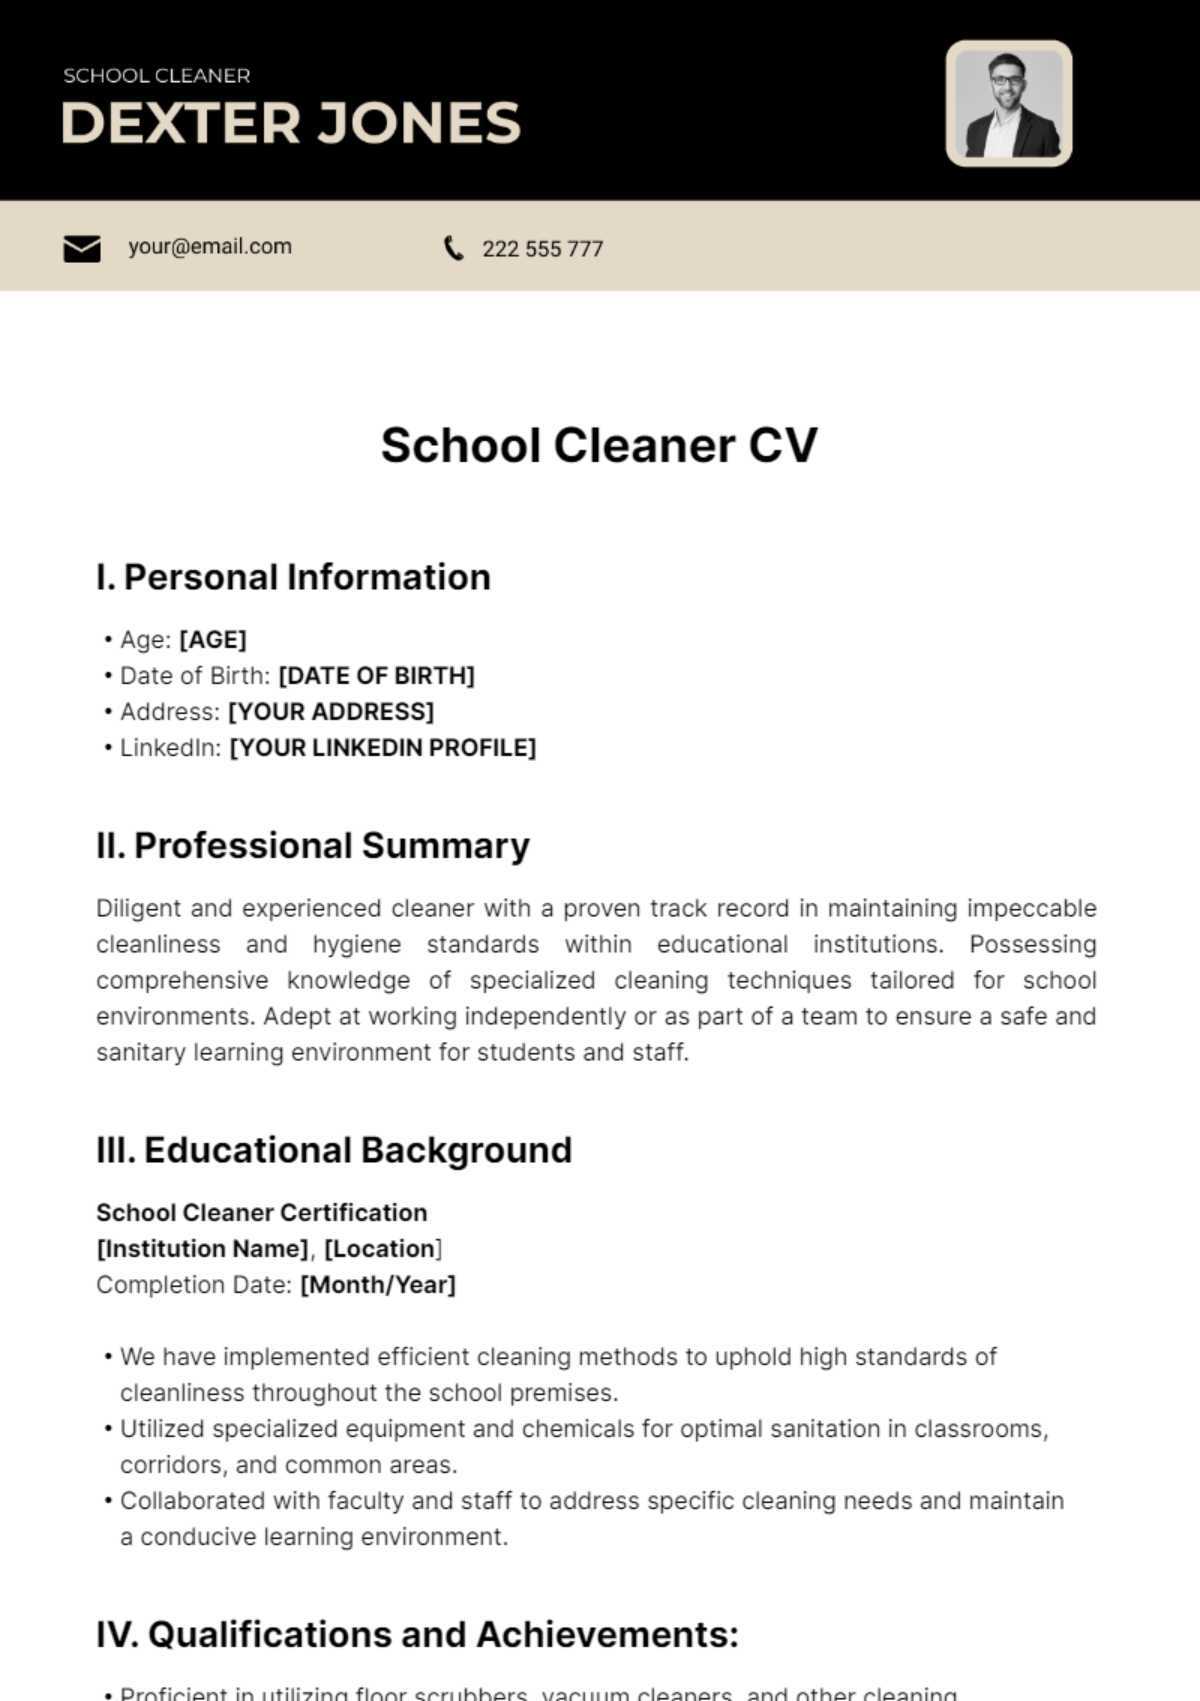 School Cleaner CV Template